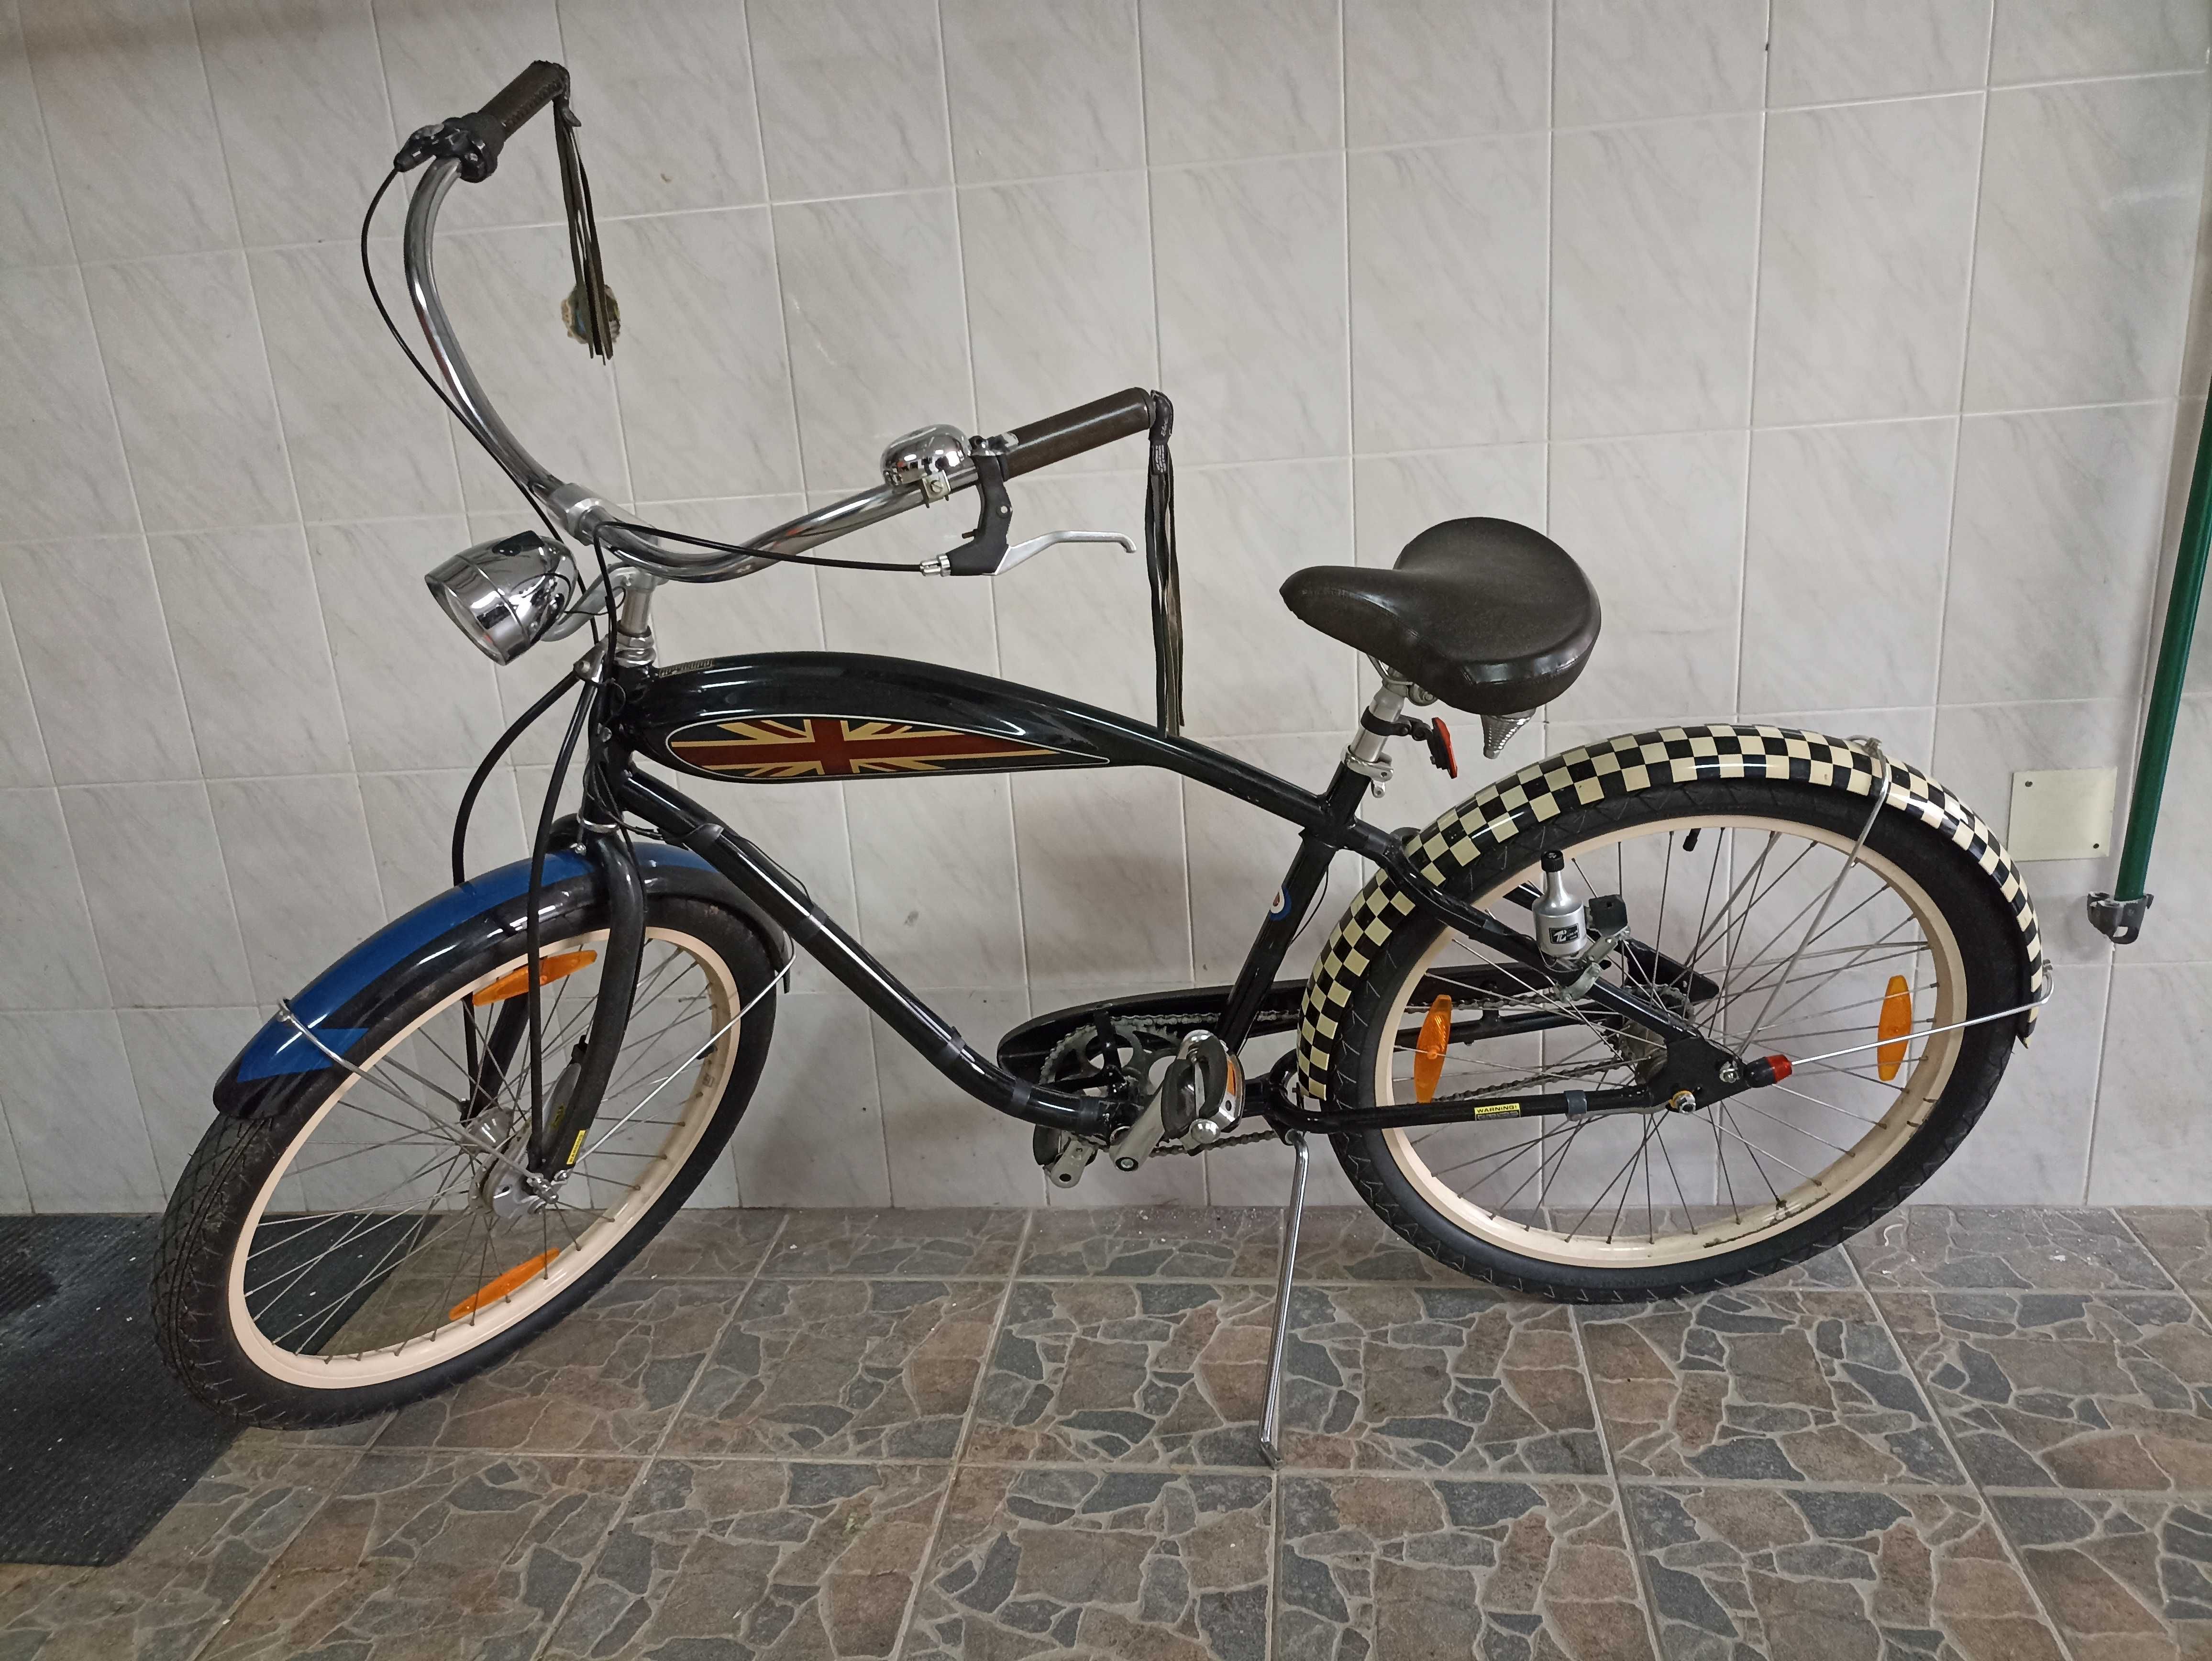 Bicicleta da marca eletra estilo choper